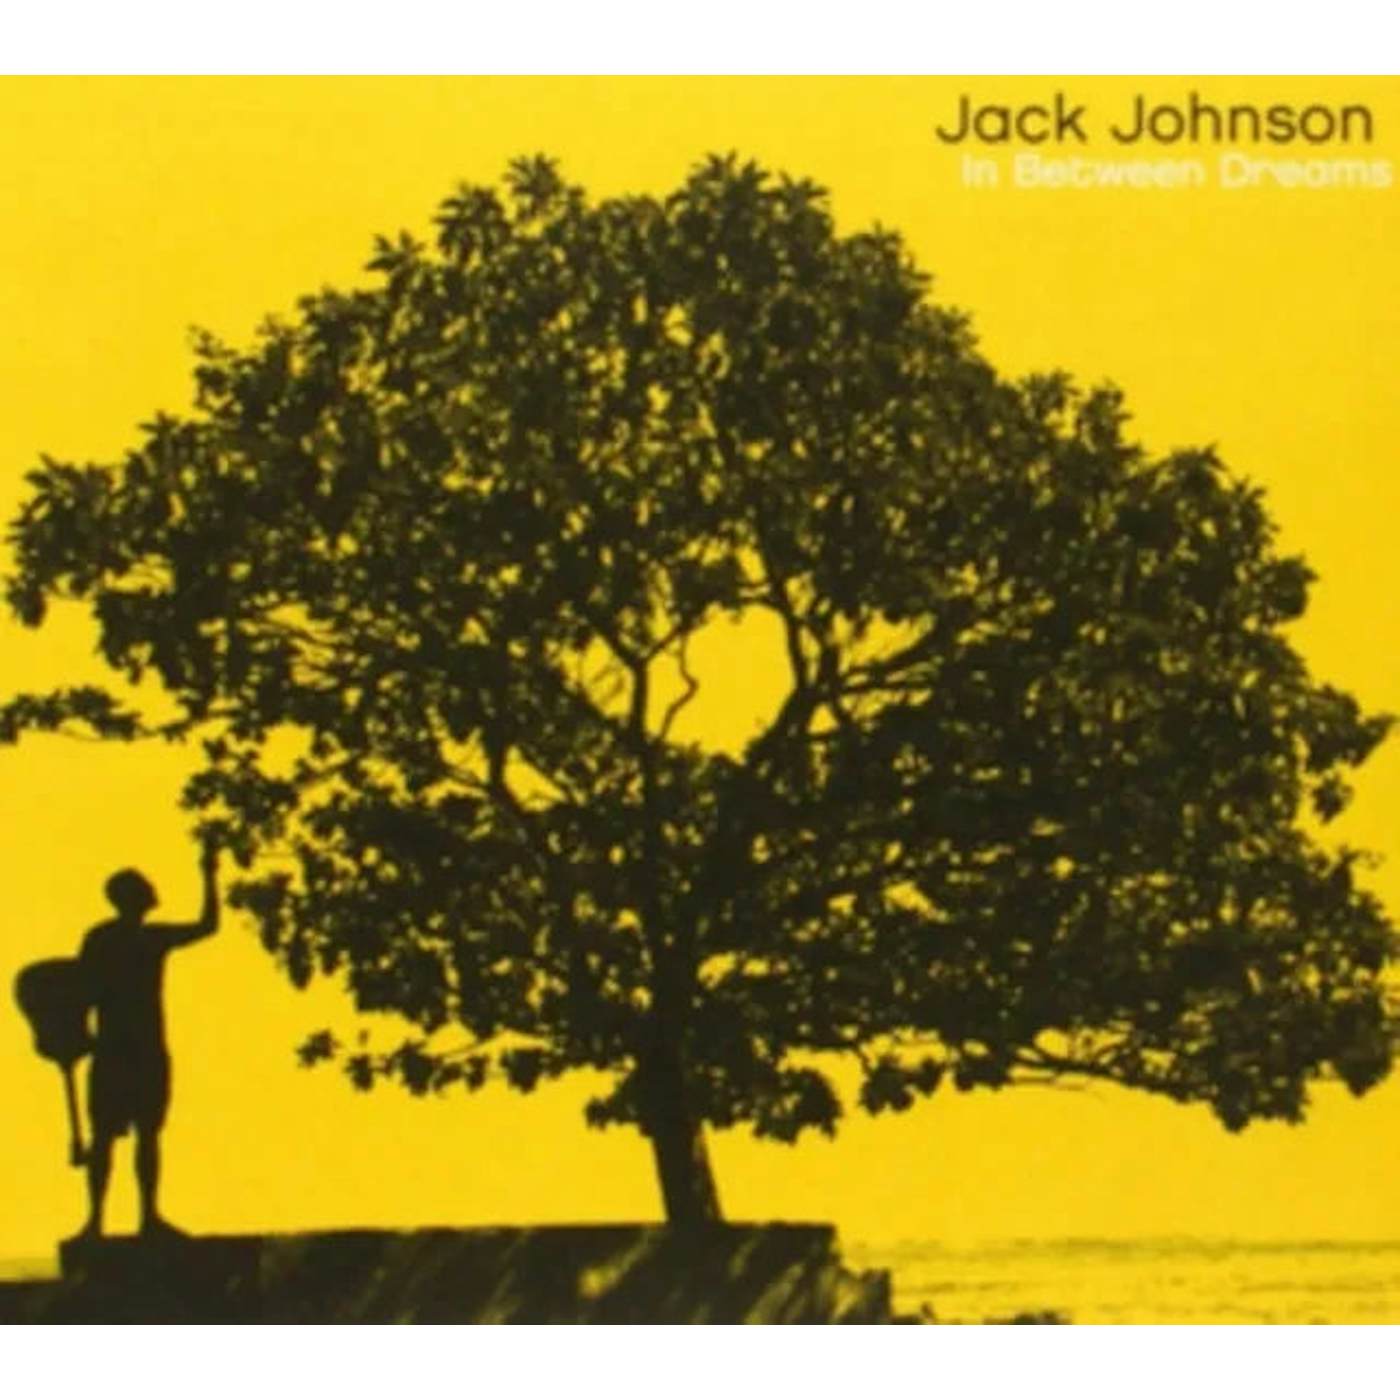 Jack Johnson - In Between Dreams.